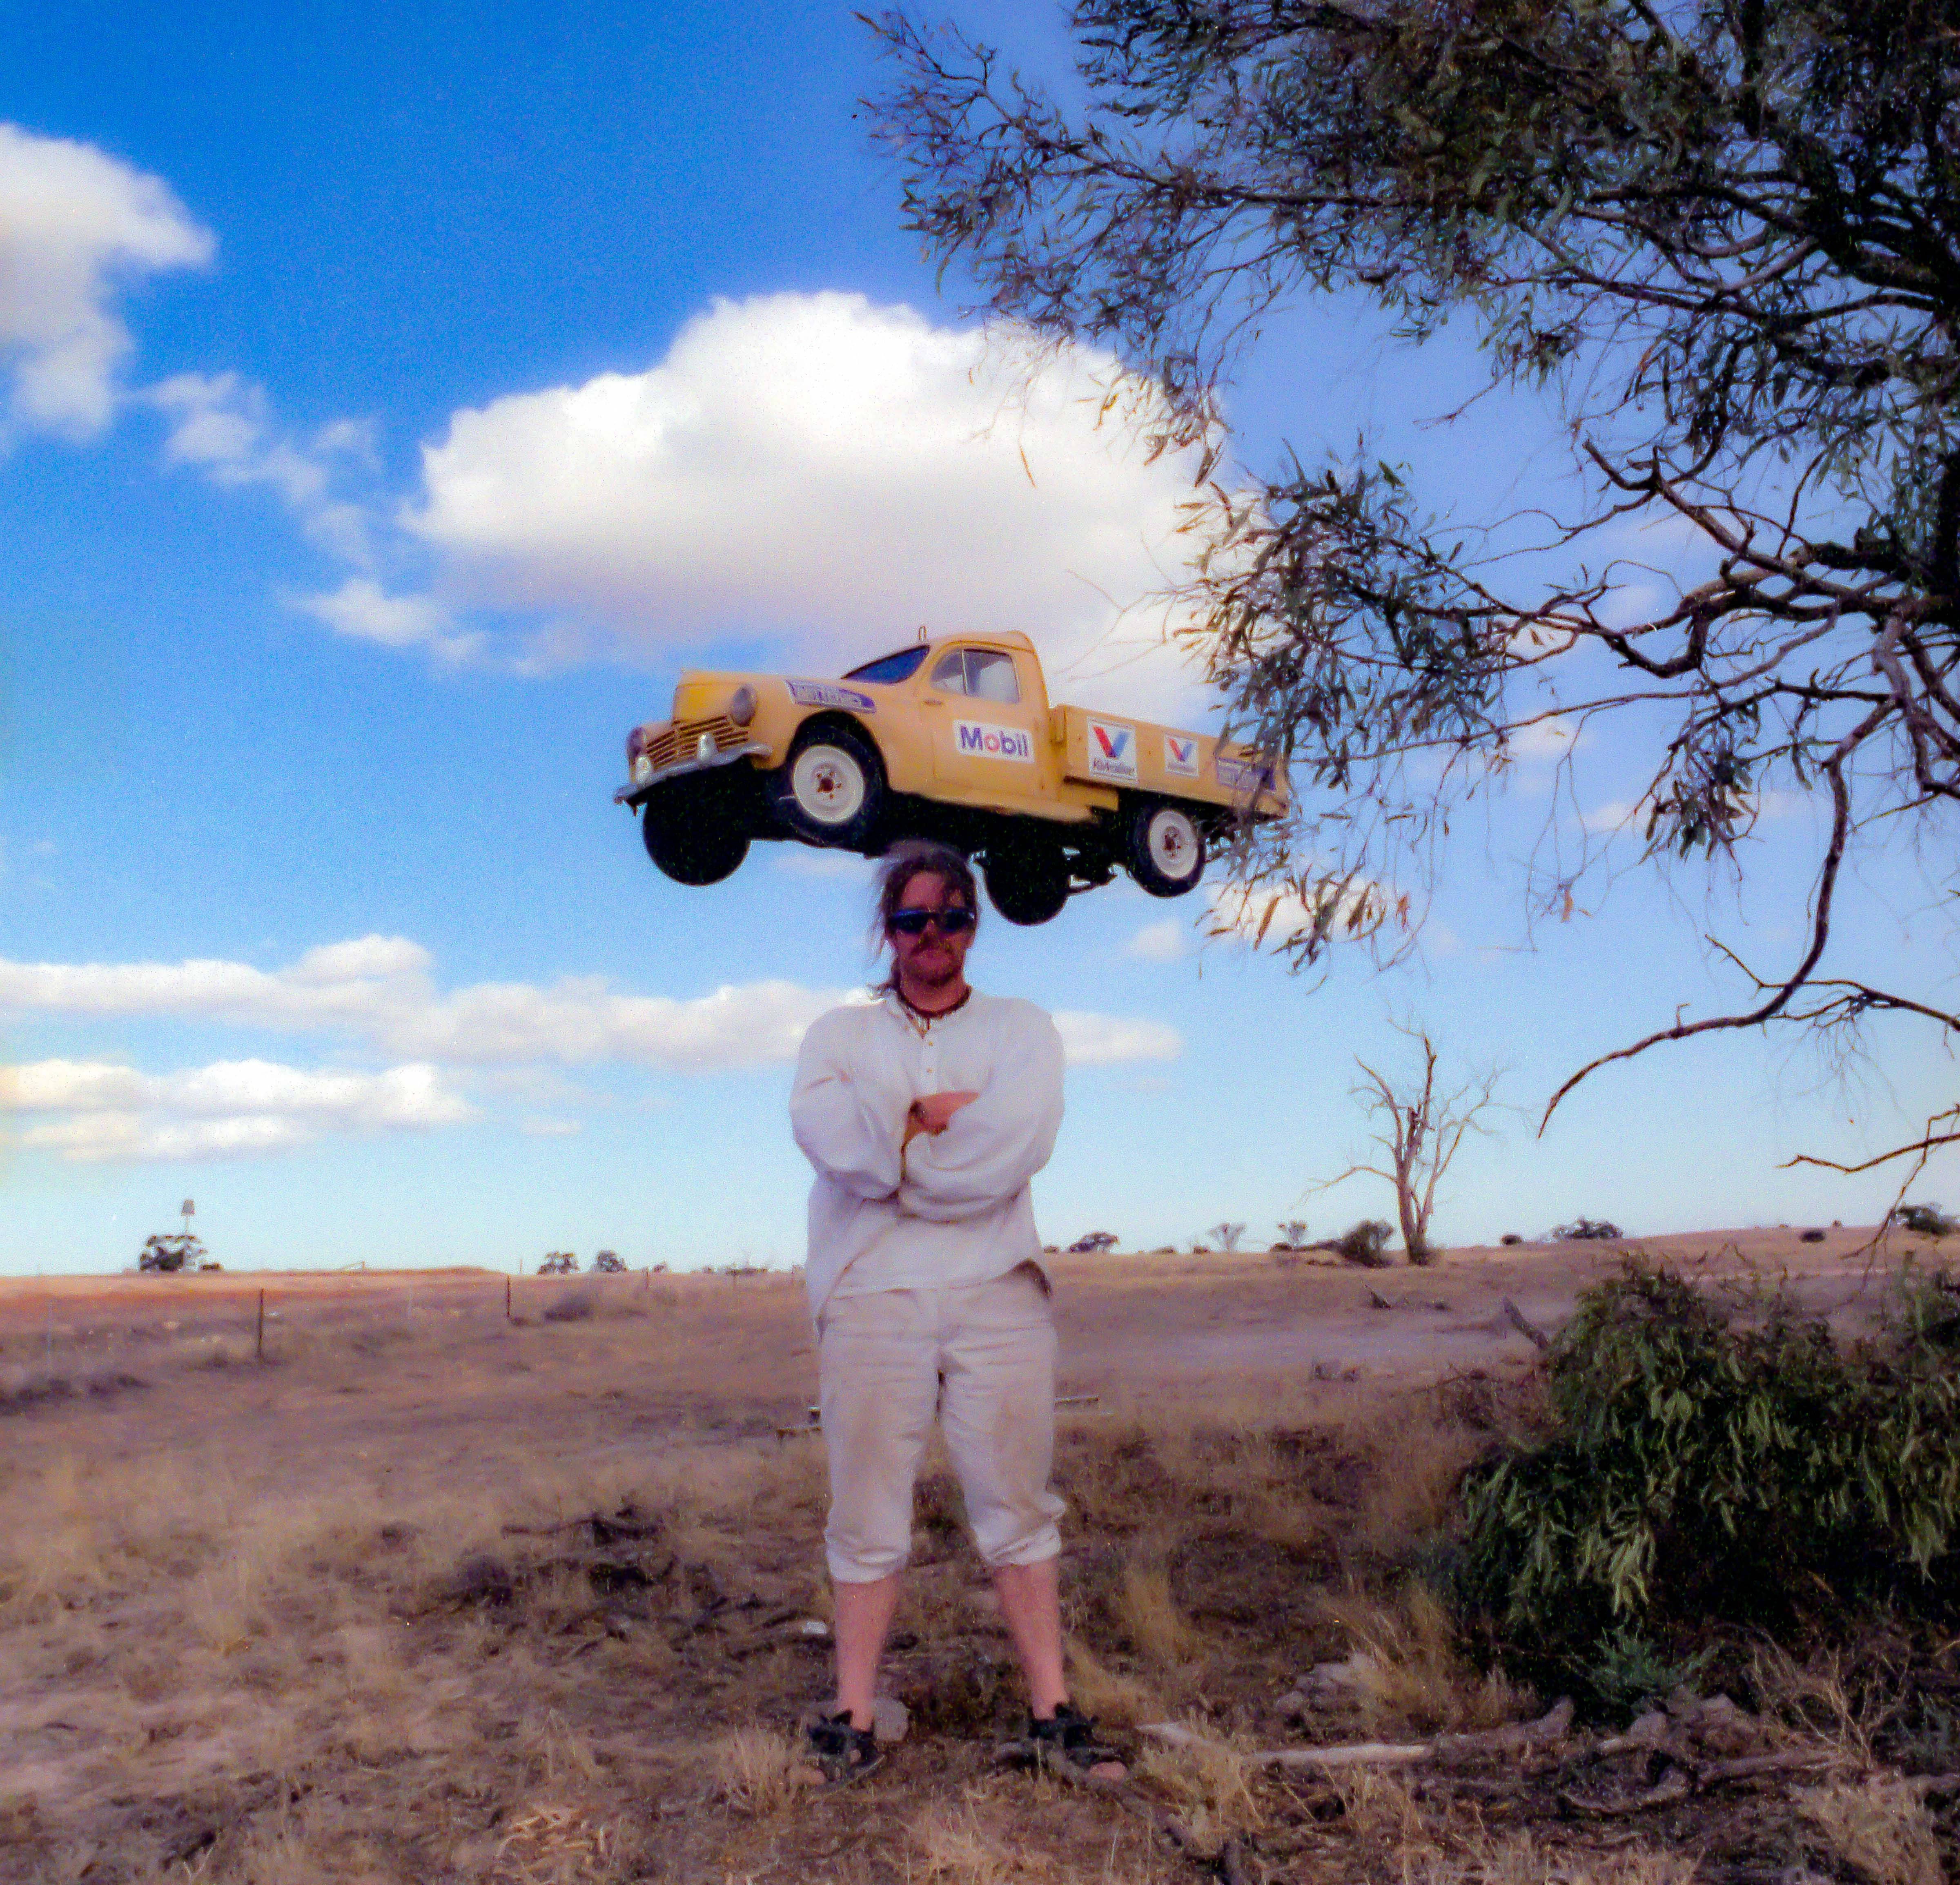 Australia, New South Wales Prov, John Muir With A Car On His Head, 1996